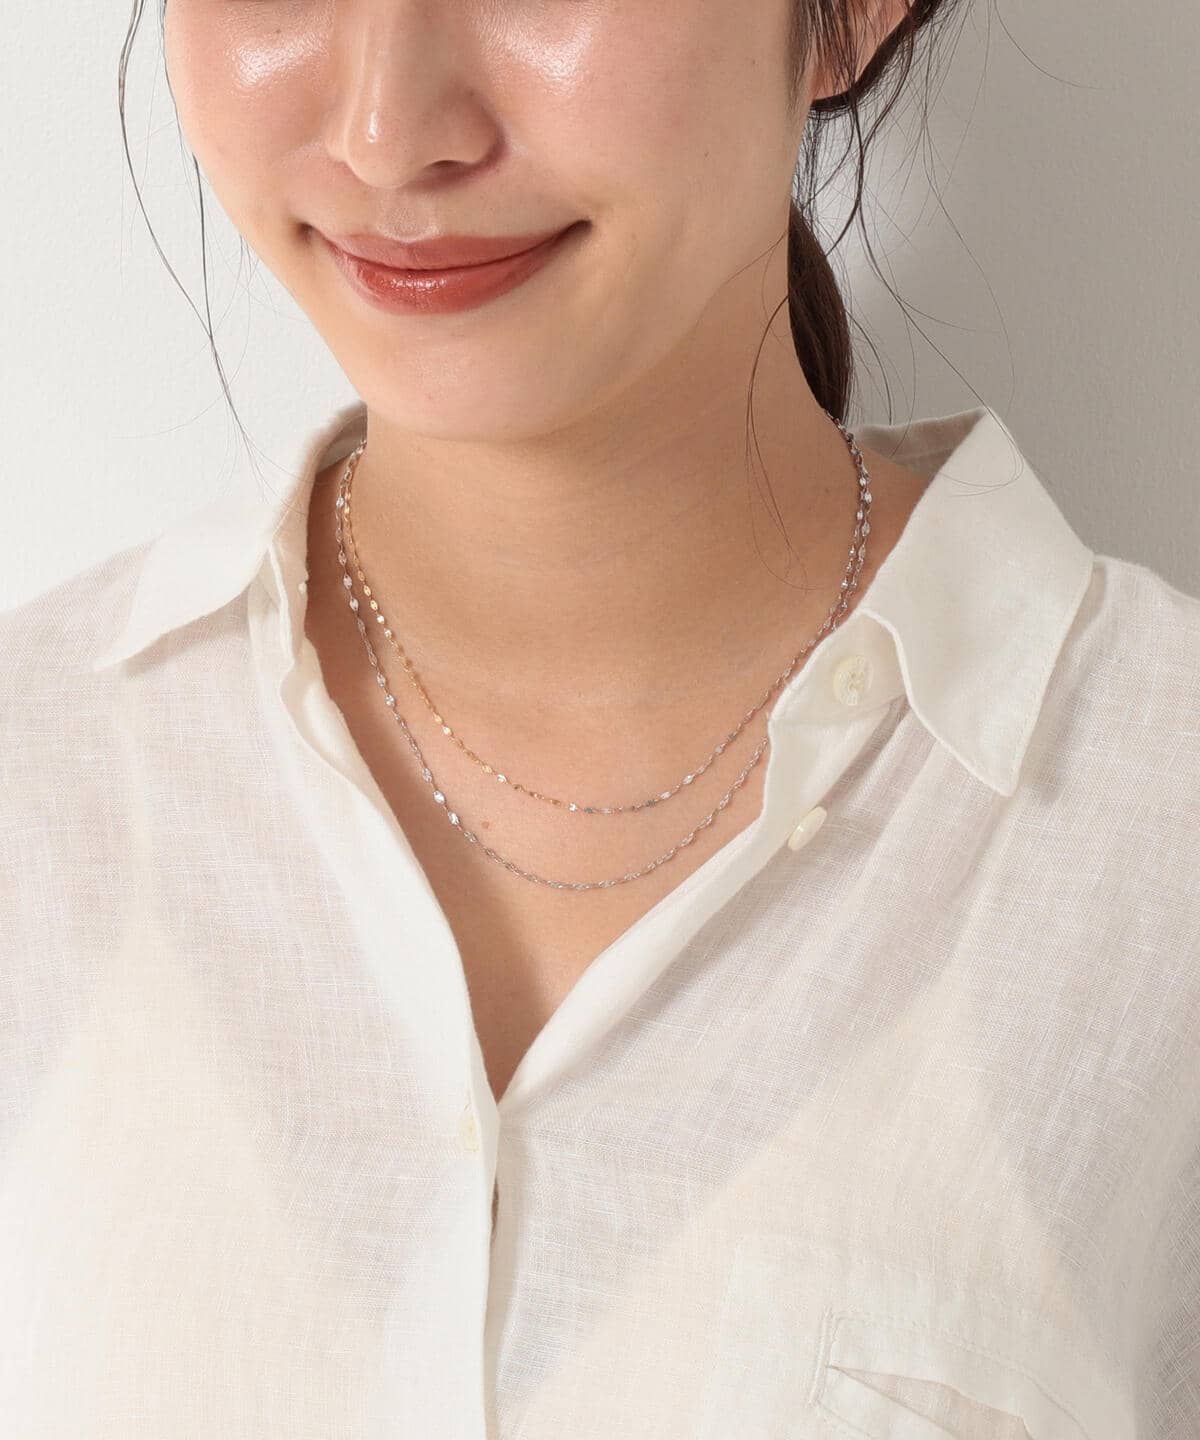 Demi-Luxe BEAMS les bon bon / Demi-Luxe BEAMS necklace (accessory